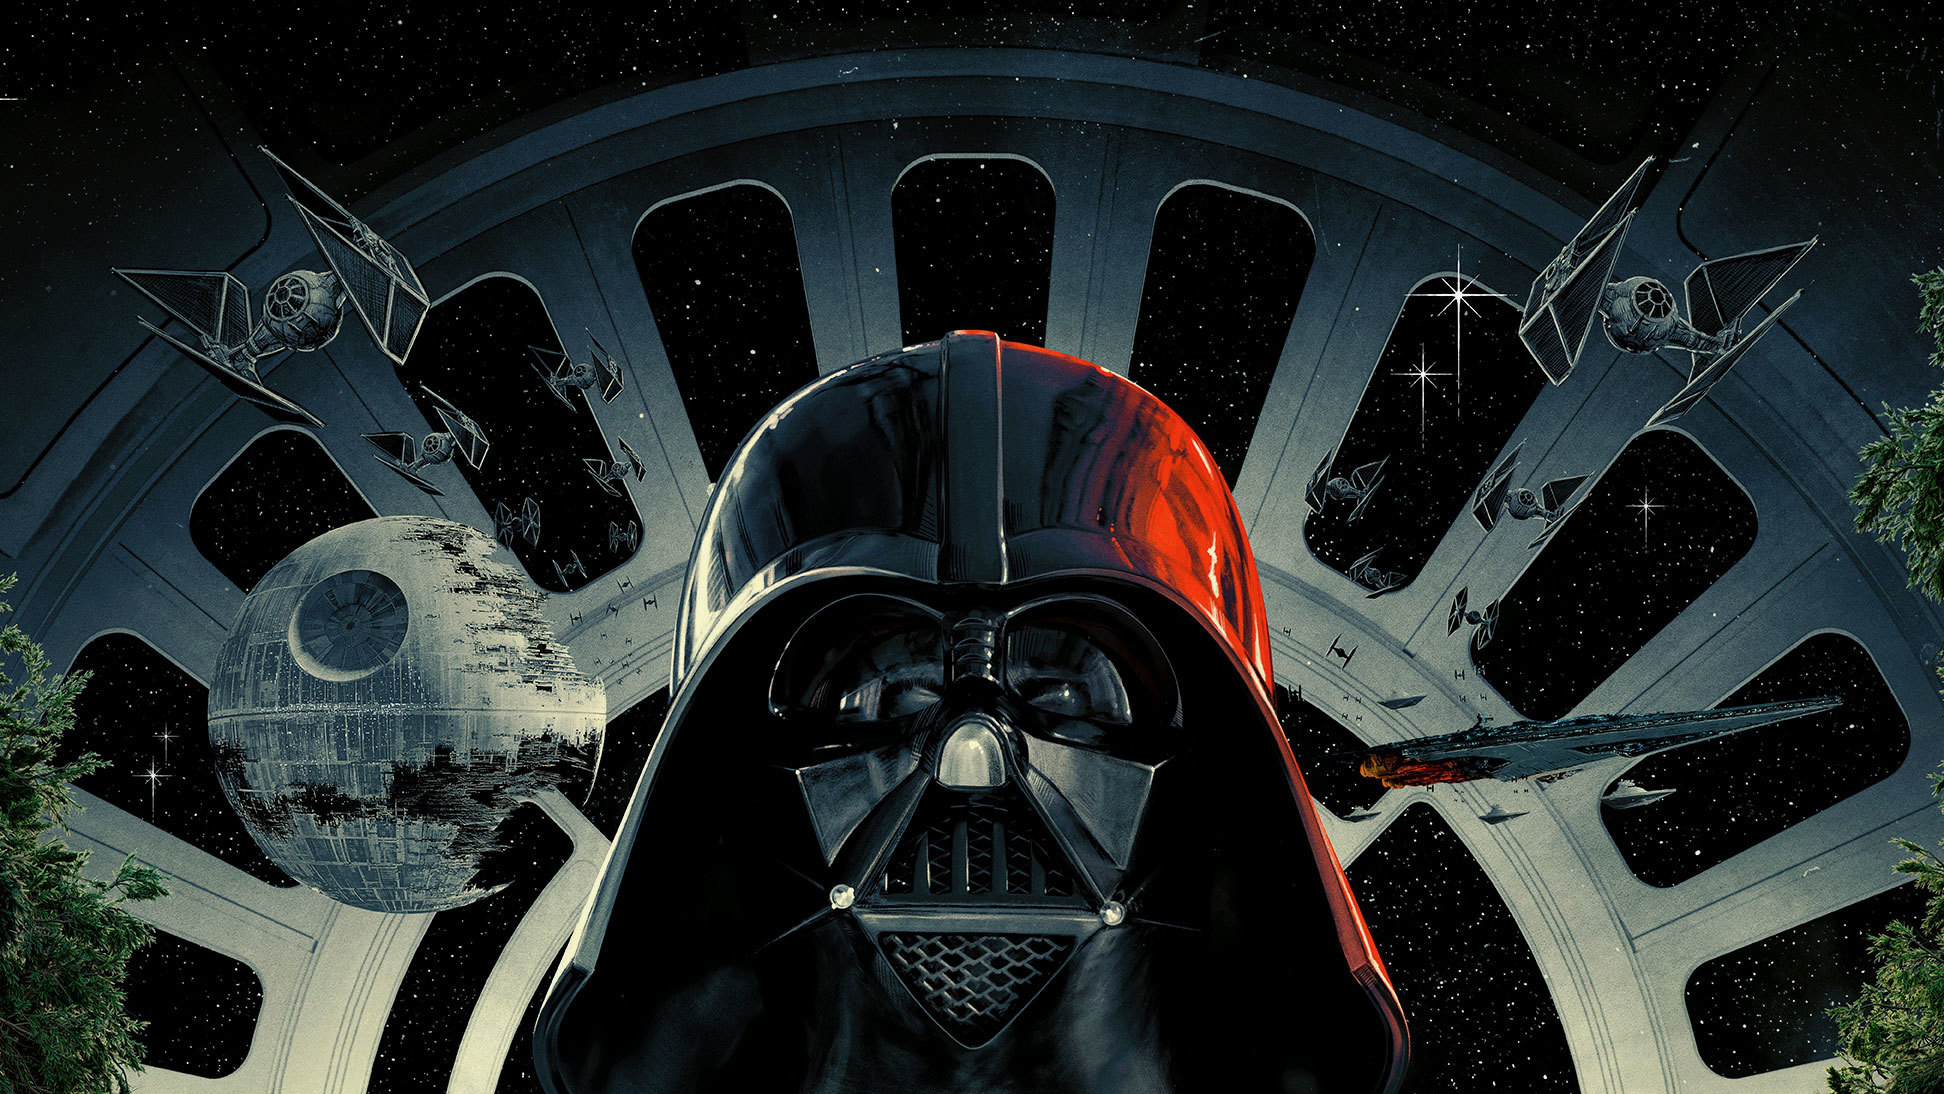 Movie Star Wars Episode VI: Return Of The Jedi HD Wallpaper | Background Image